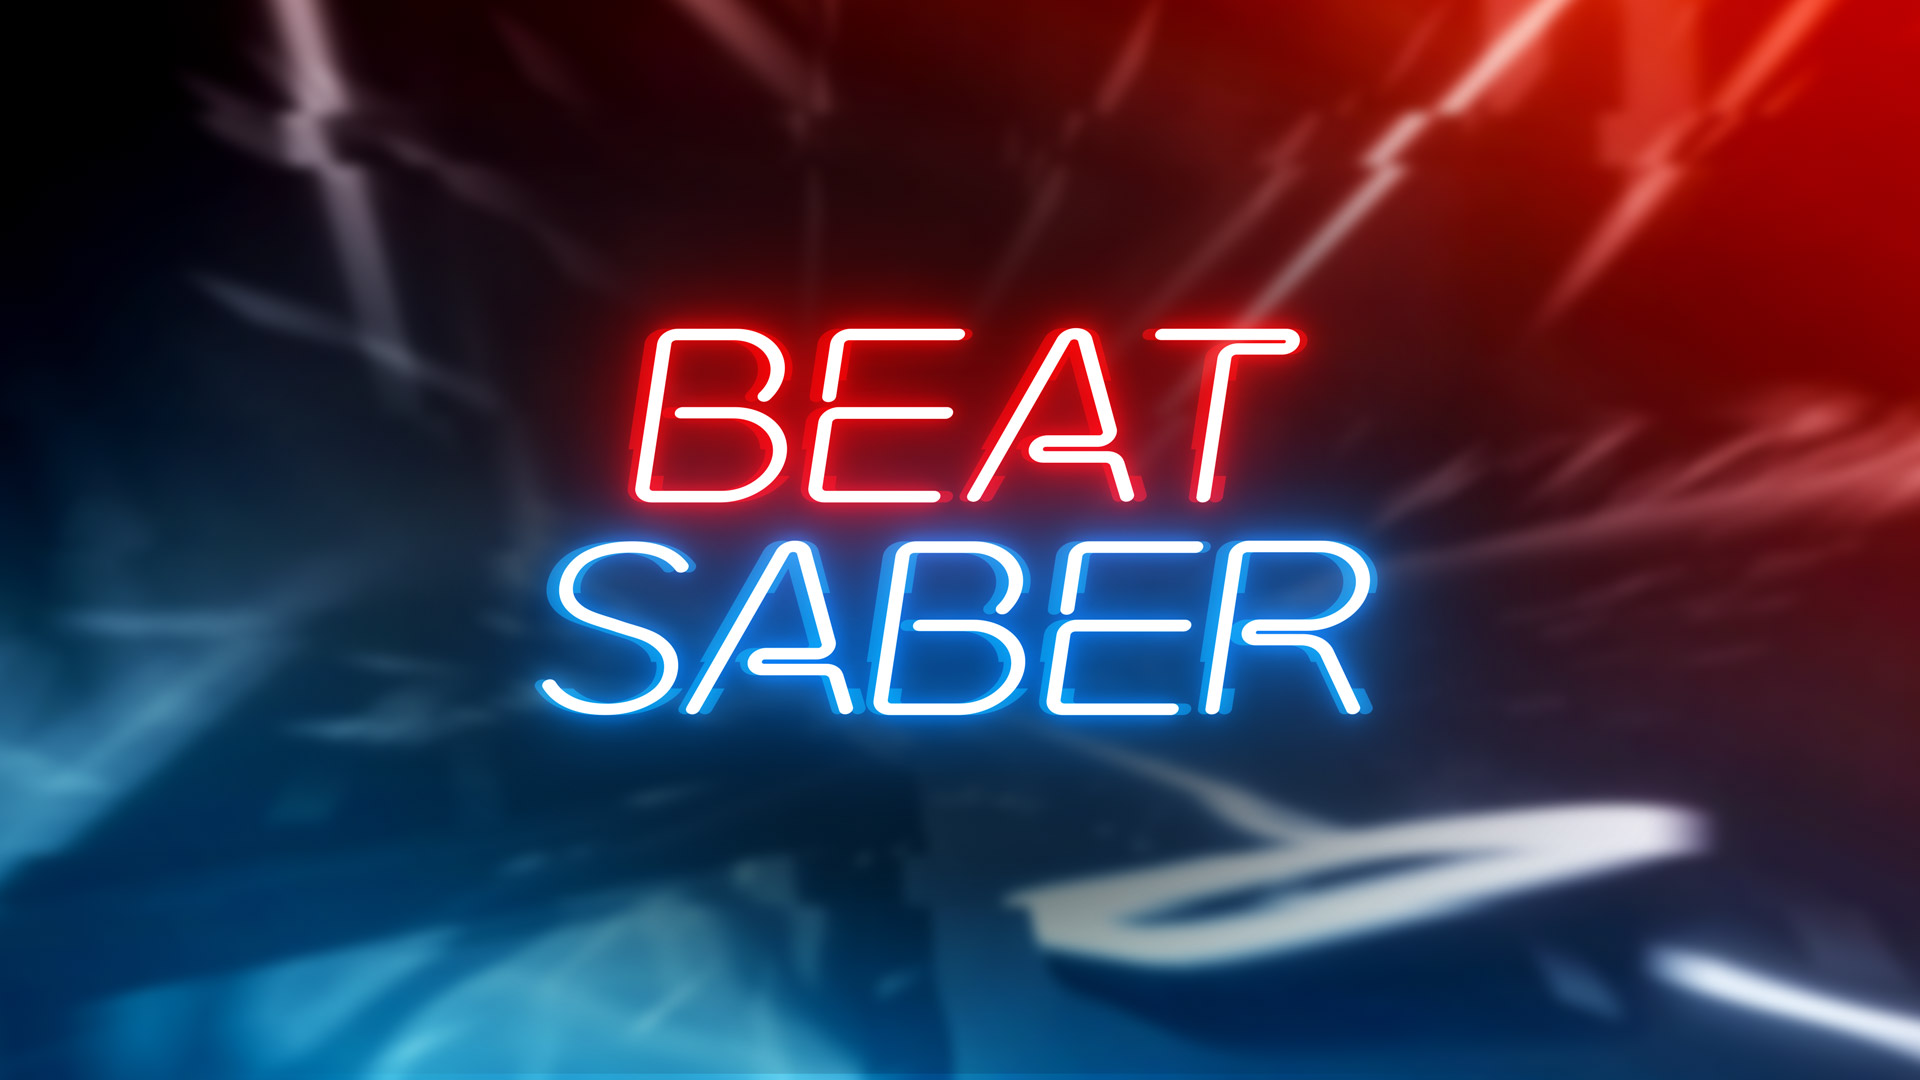 ps4 vr game beat saber